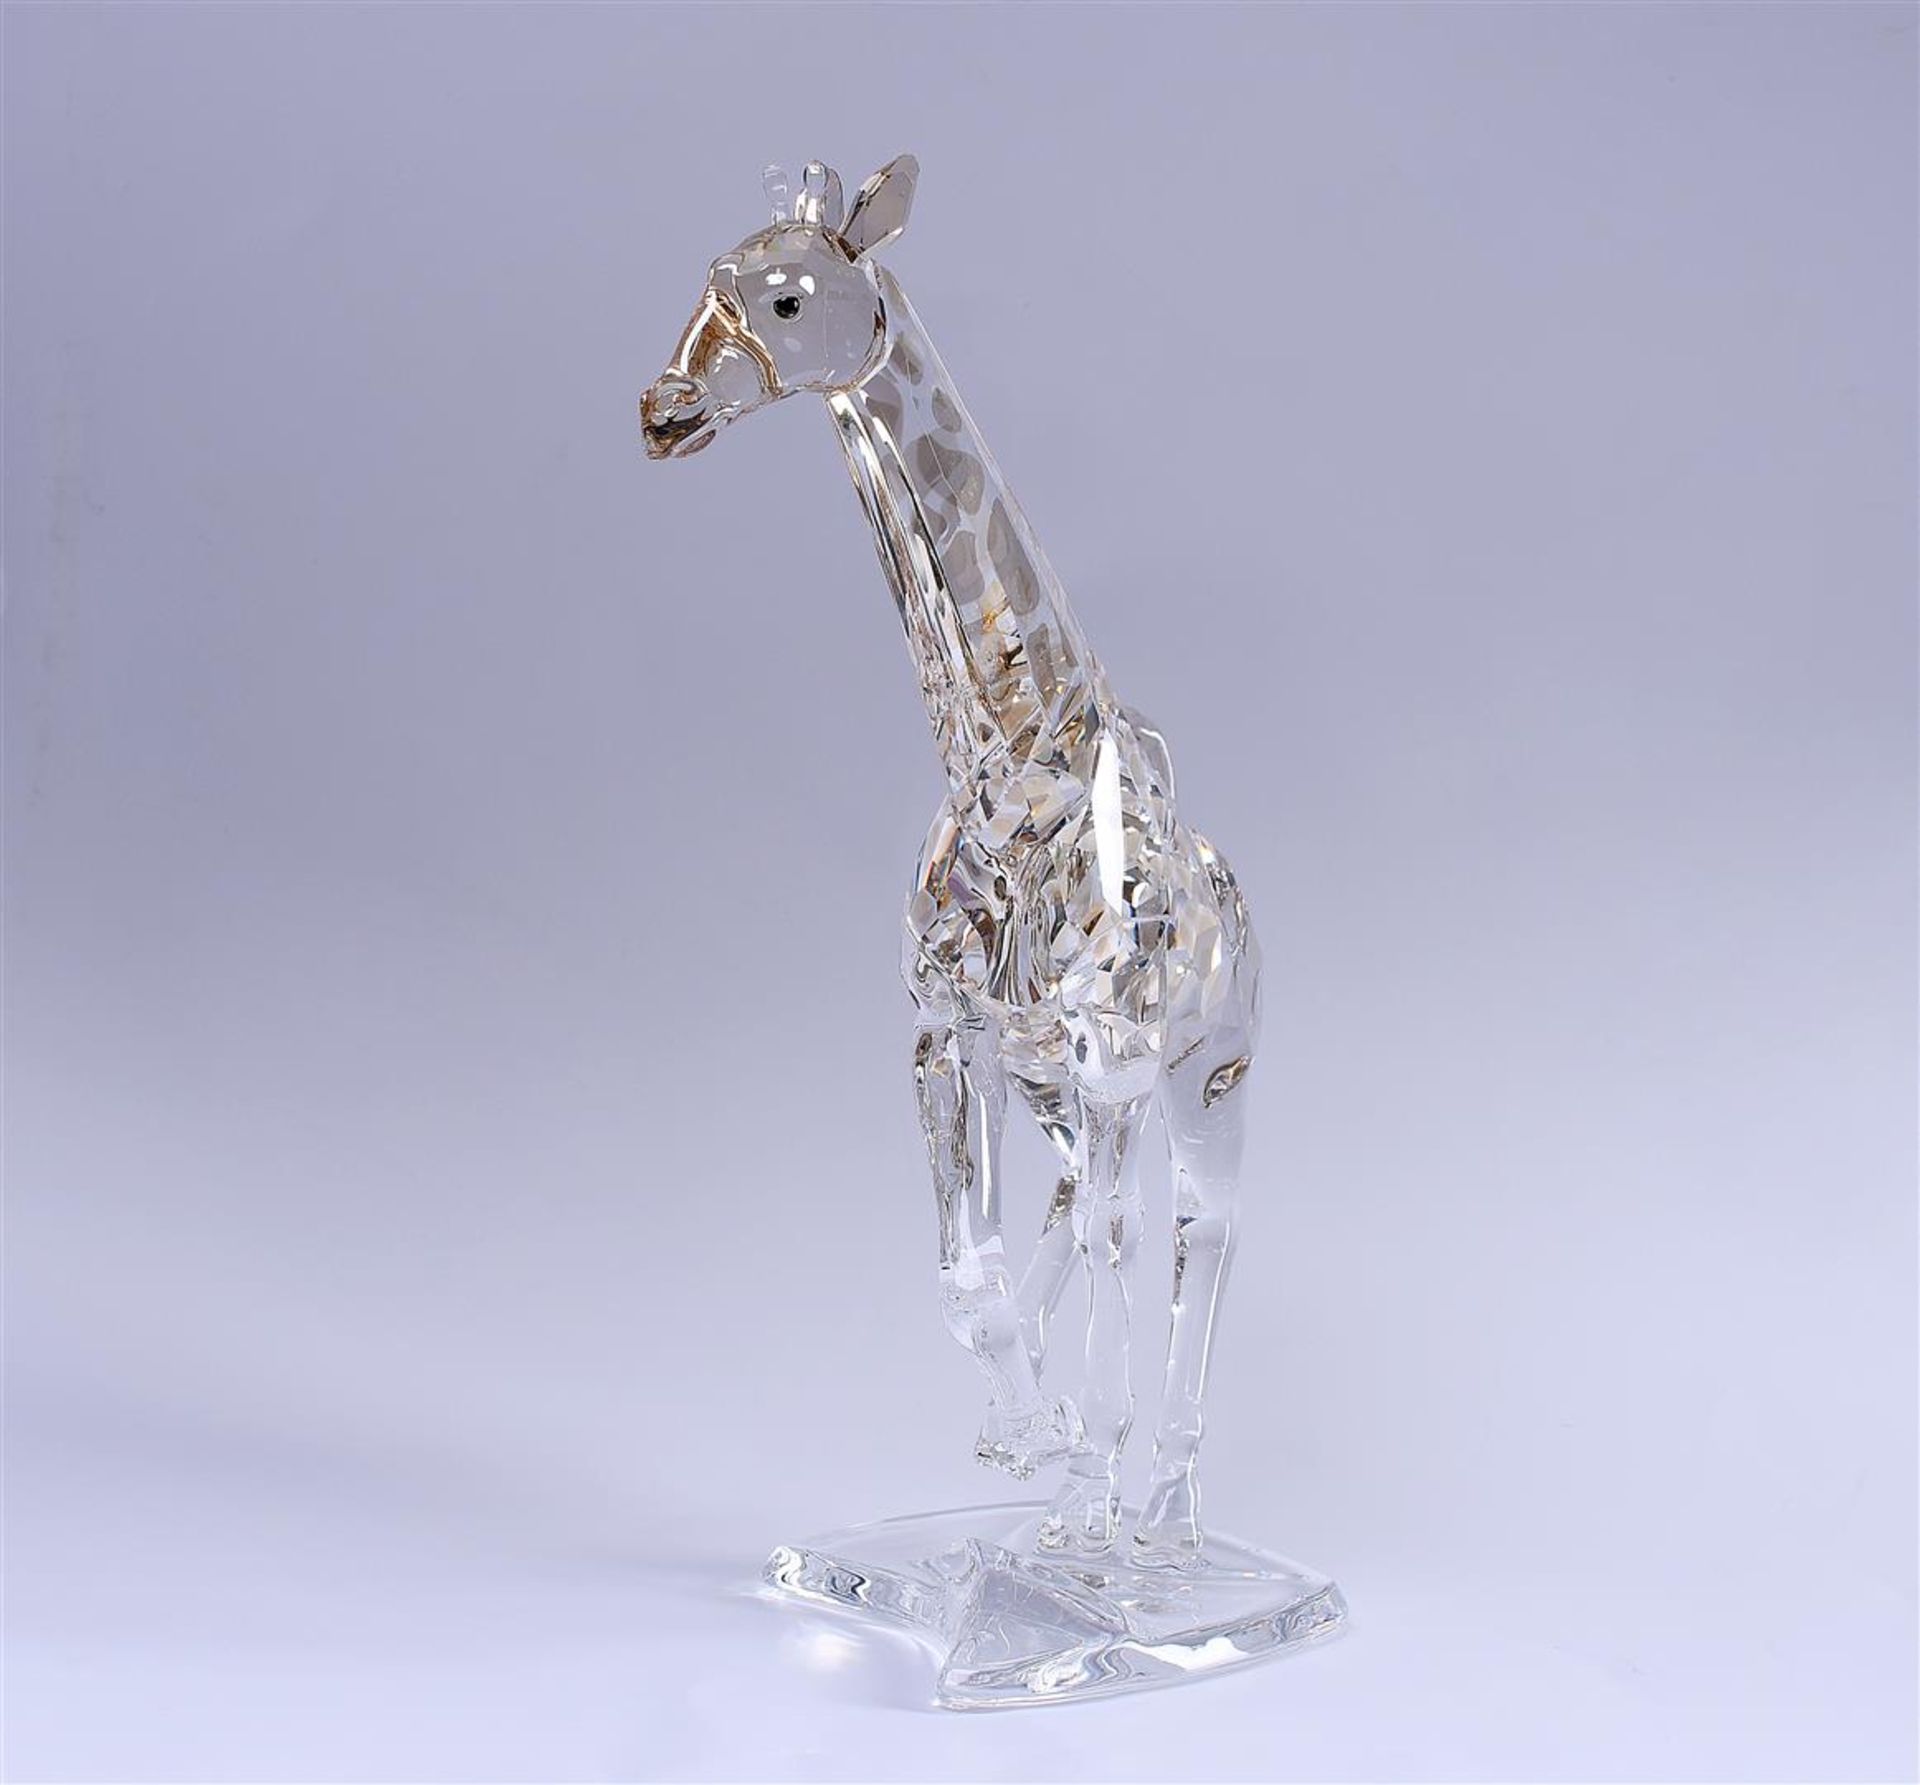 Swarovski, Giraffe, Year of Release 2012, 935896. Includes original box.
17 x 12 cm. - Image 4 of 8